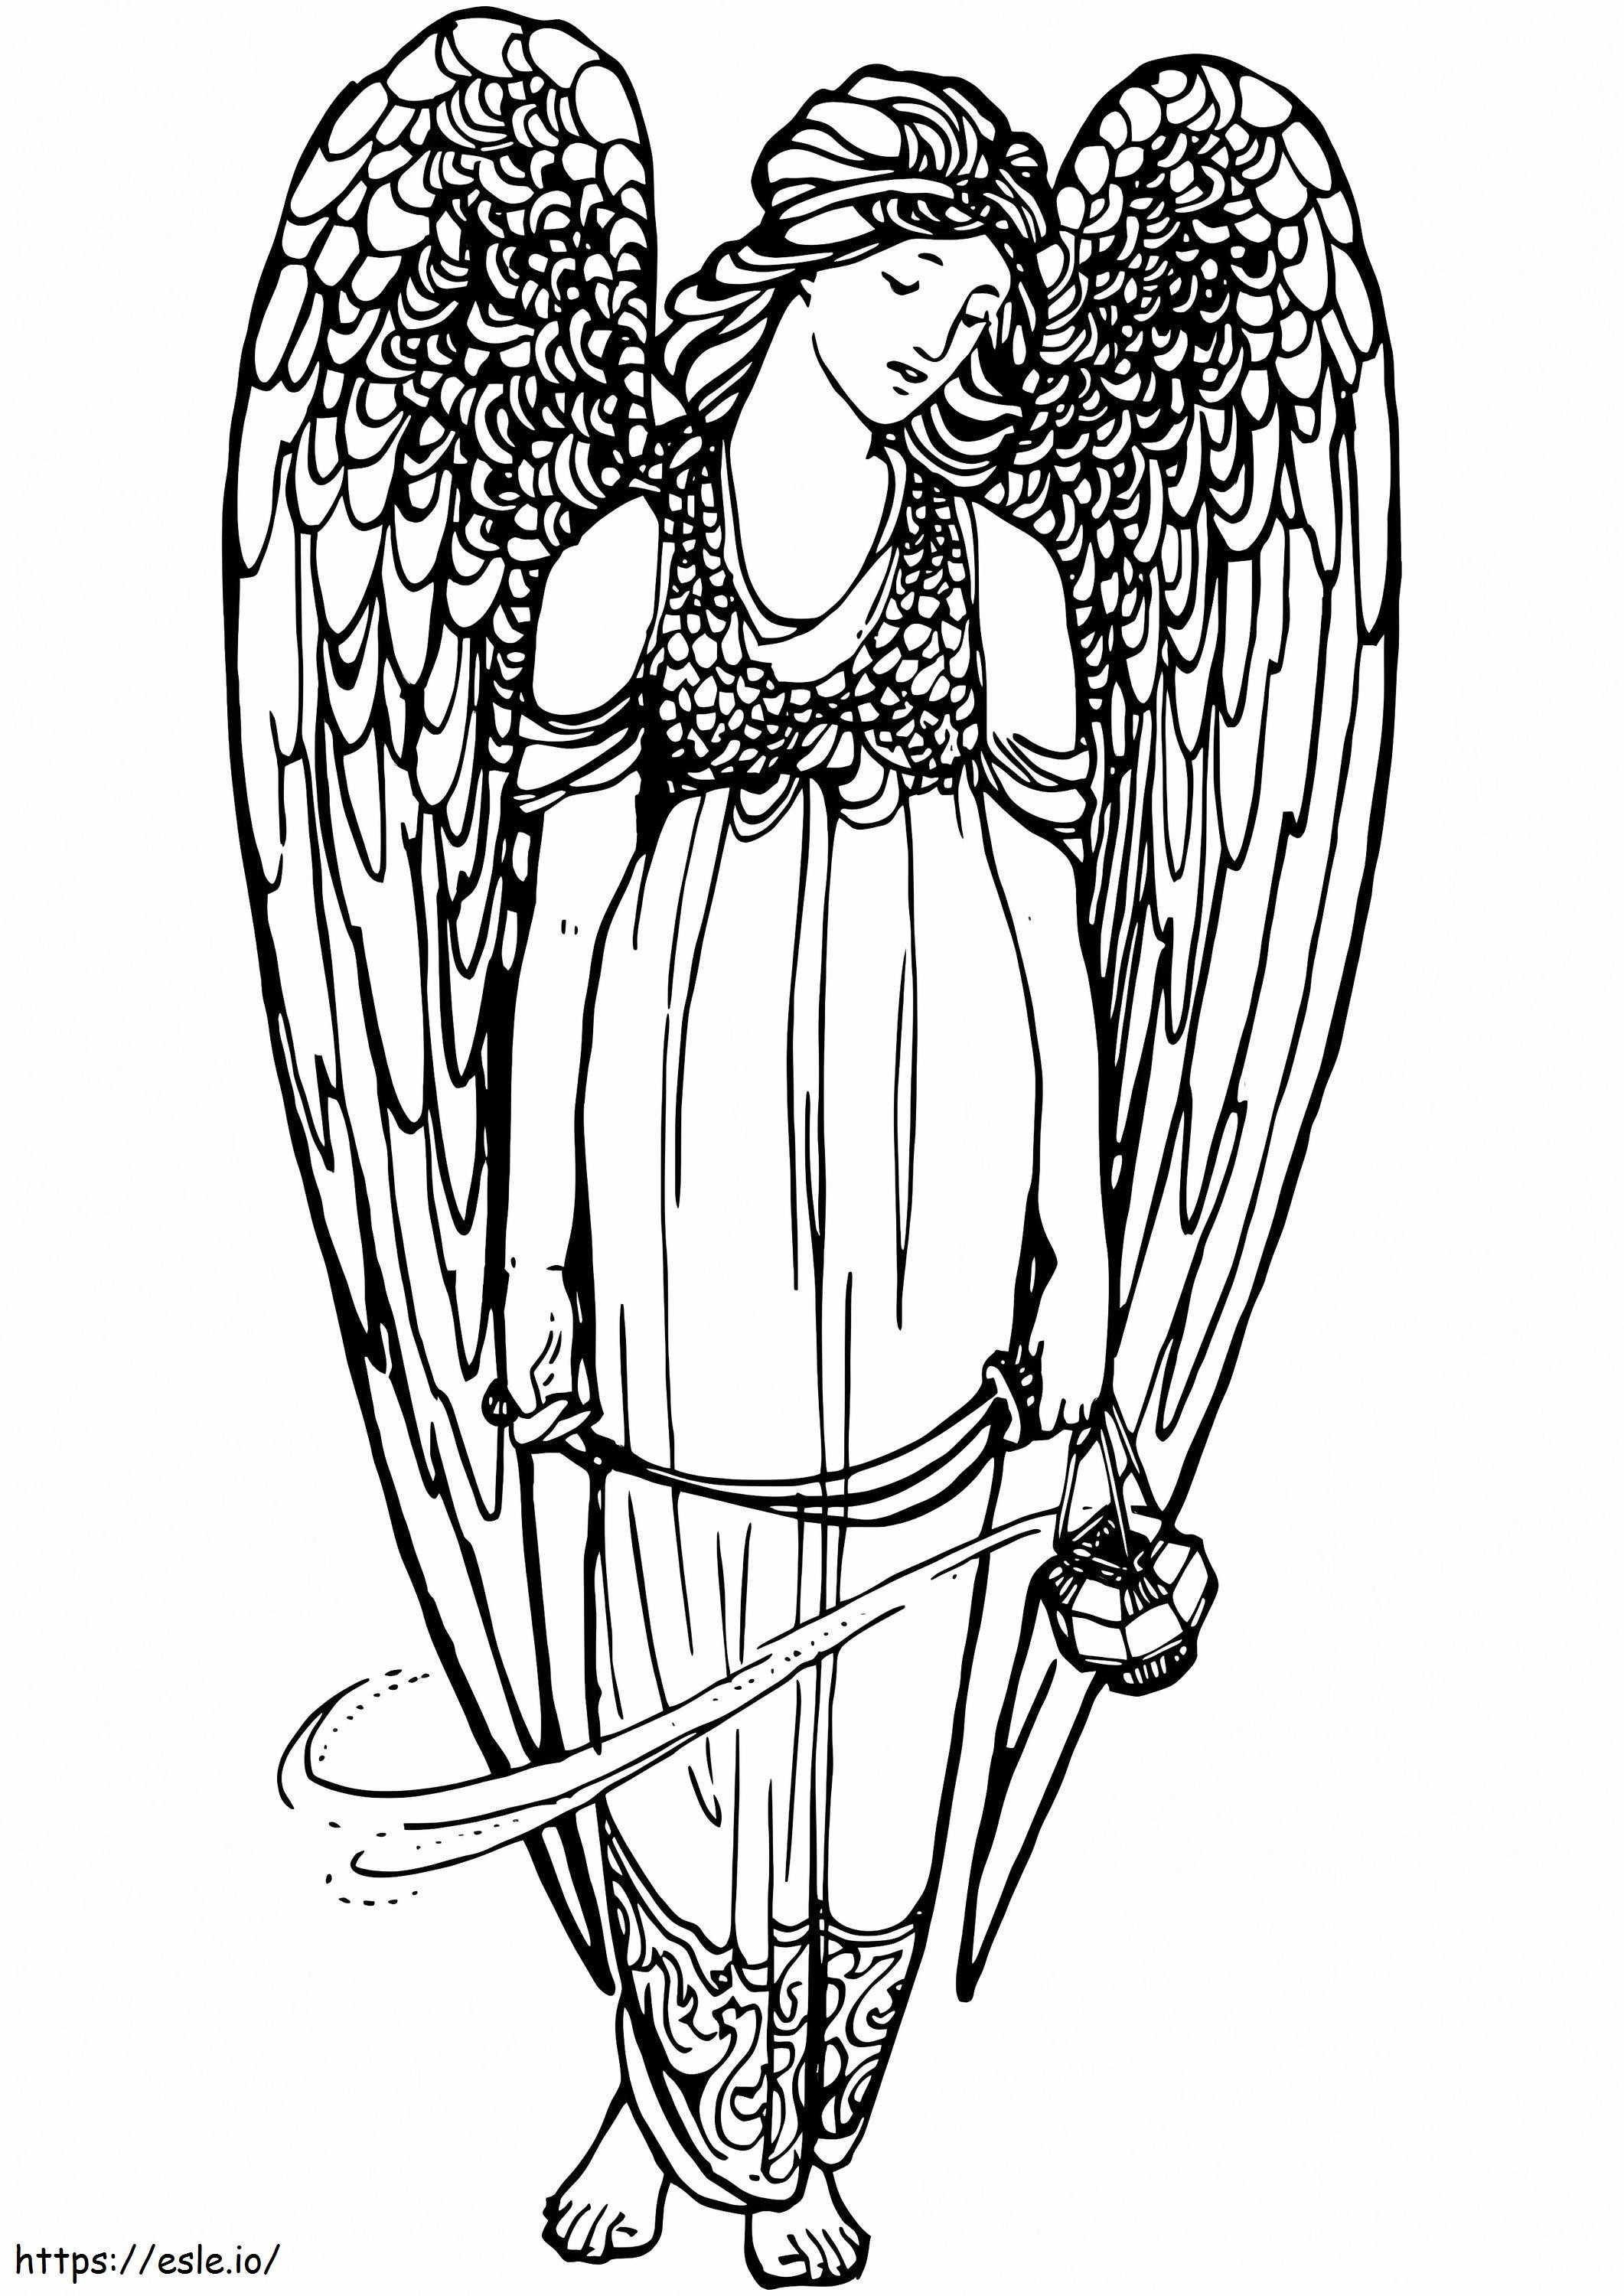 Wonderful Angel 2 coloring page